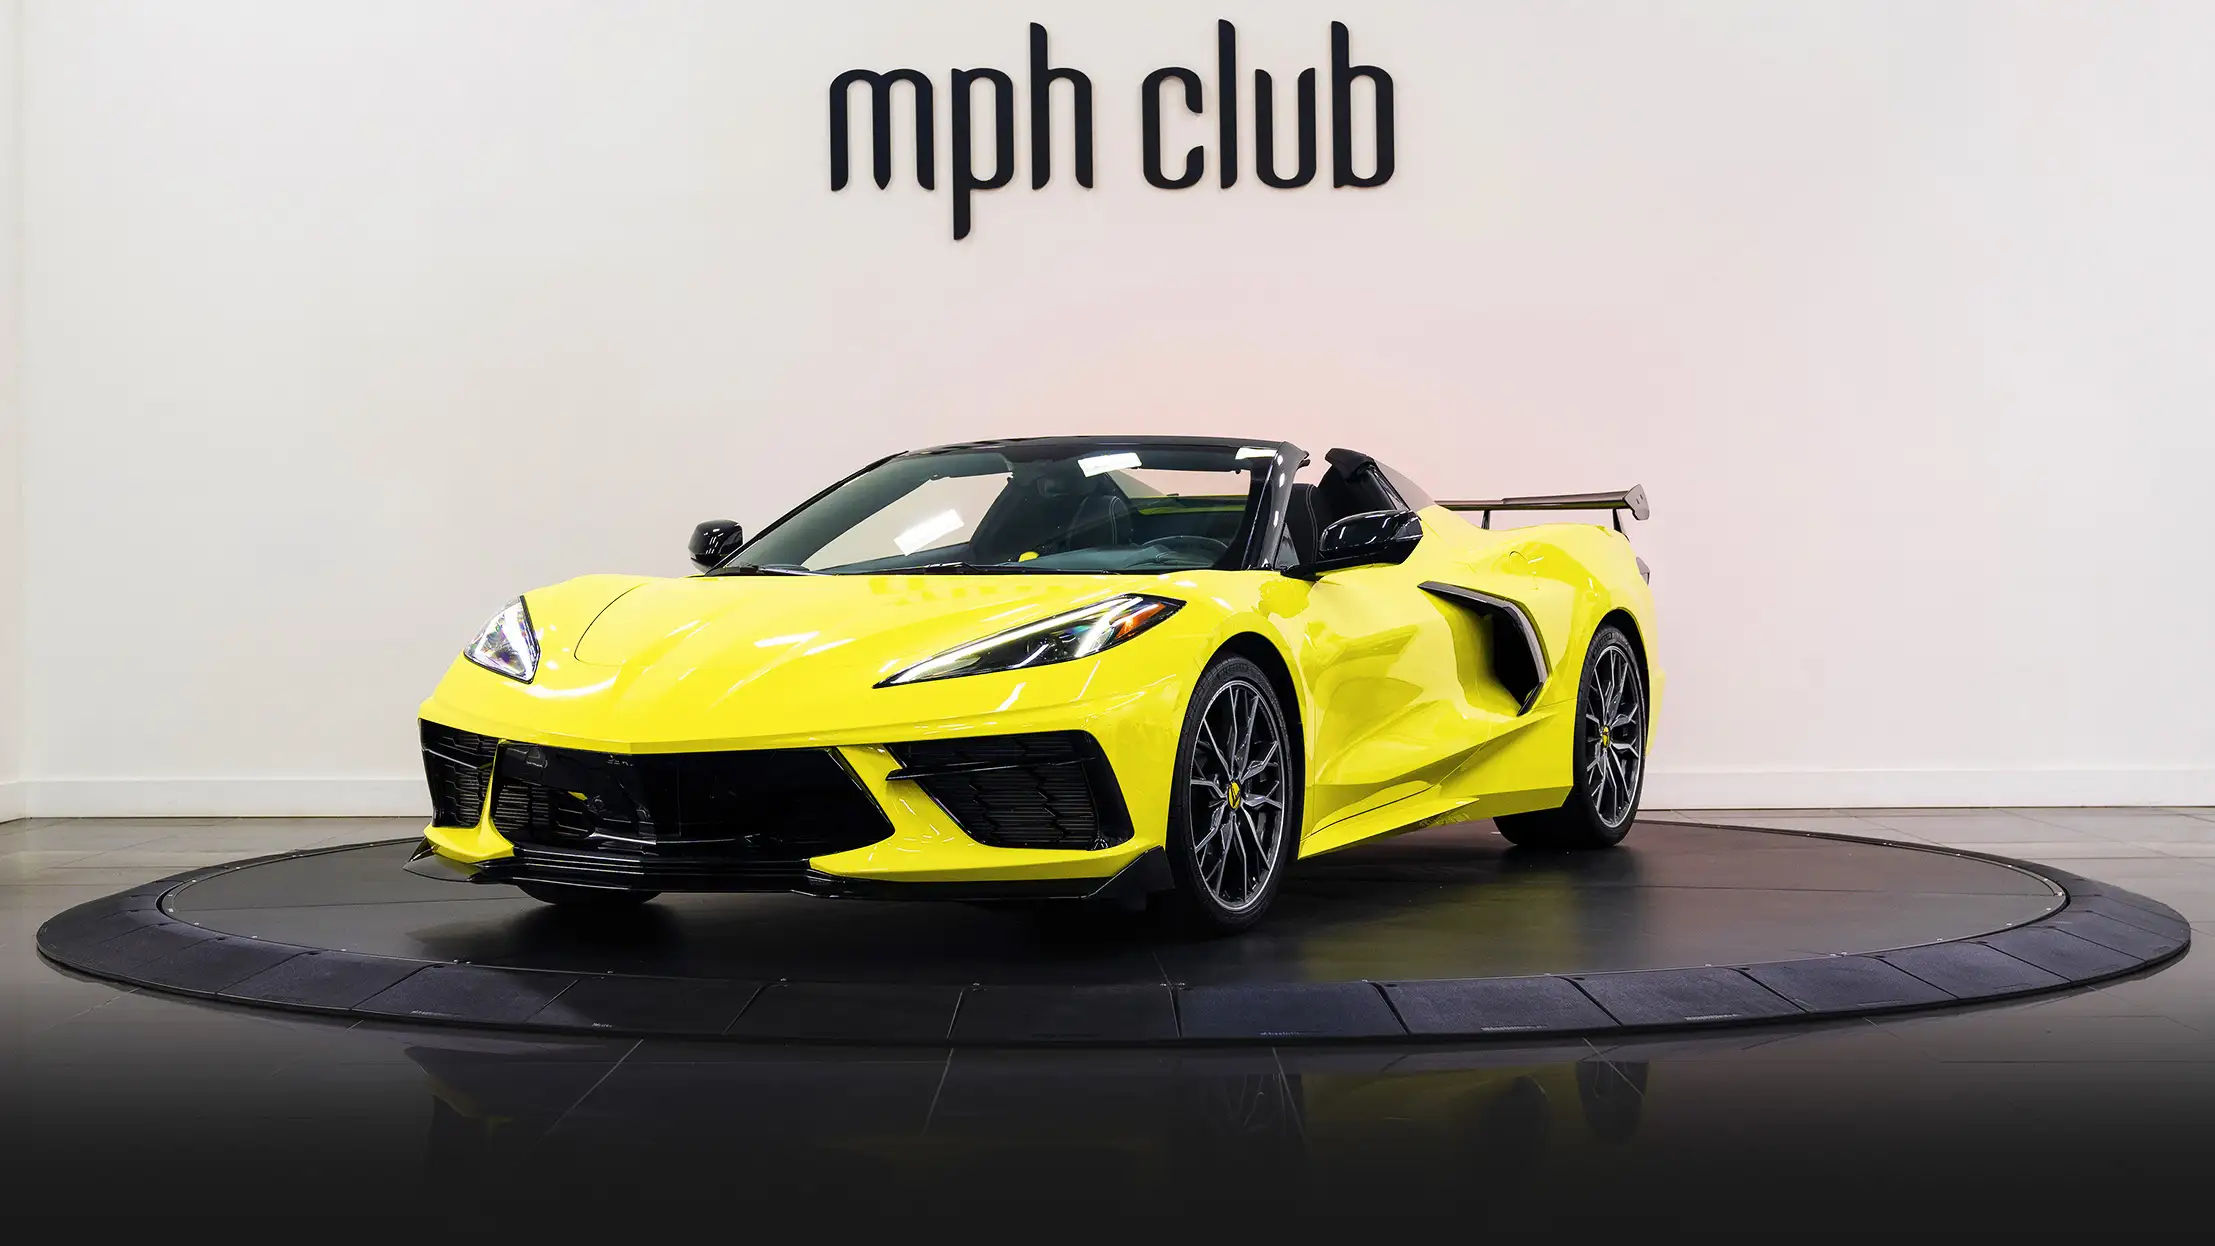 Yellow Chevrolet Corvette C8 3LT rental profile view mph club